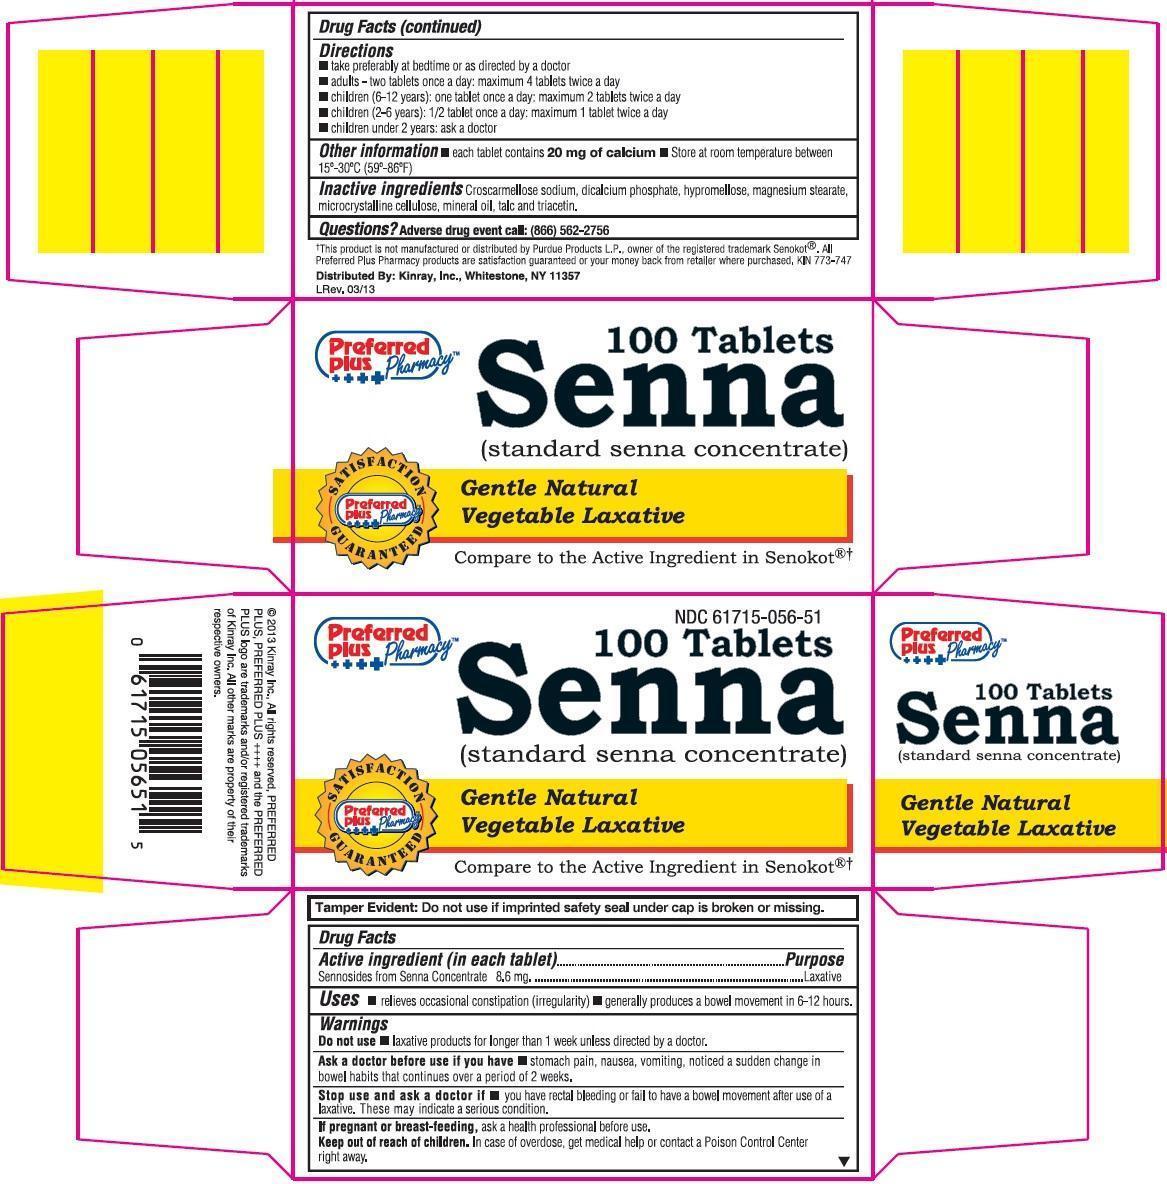 Preferred Plus Senna product label image